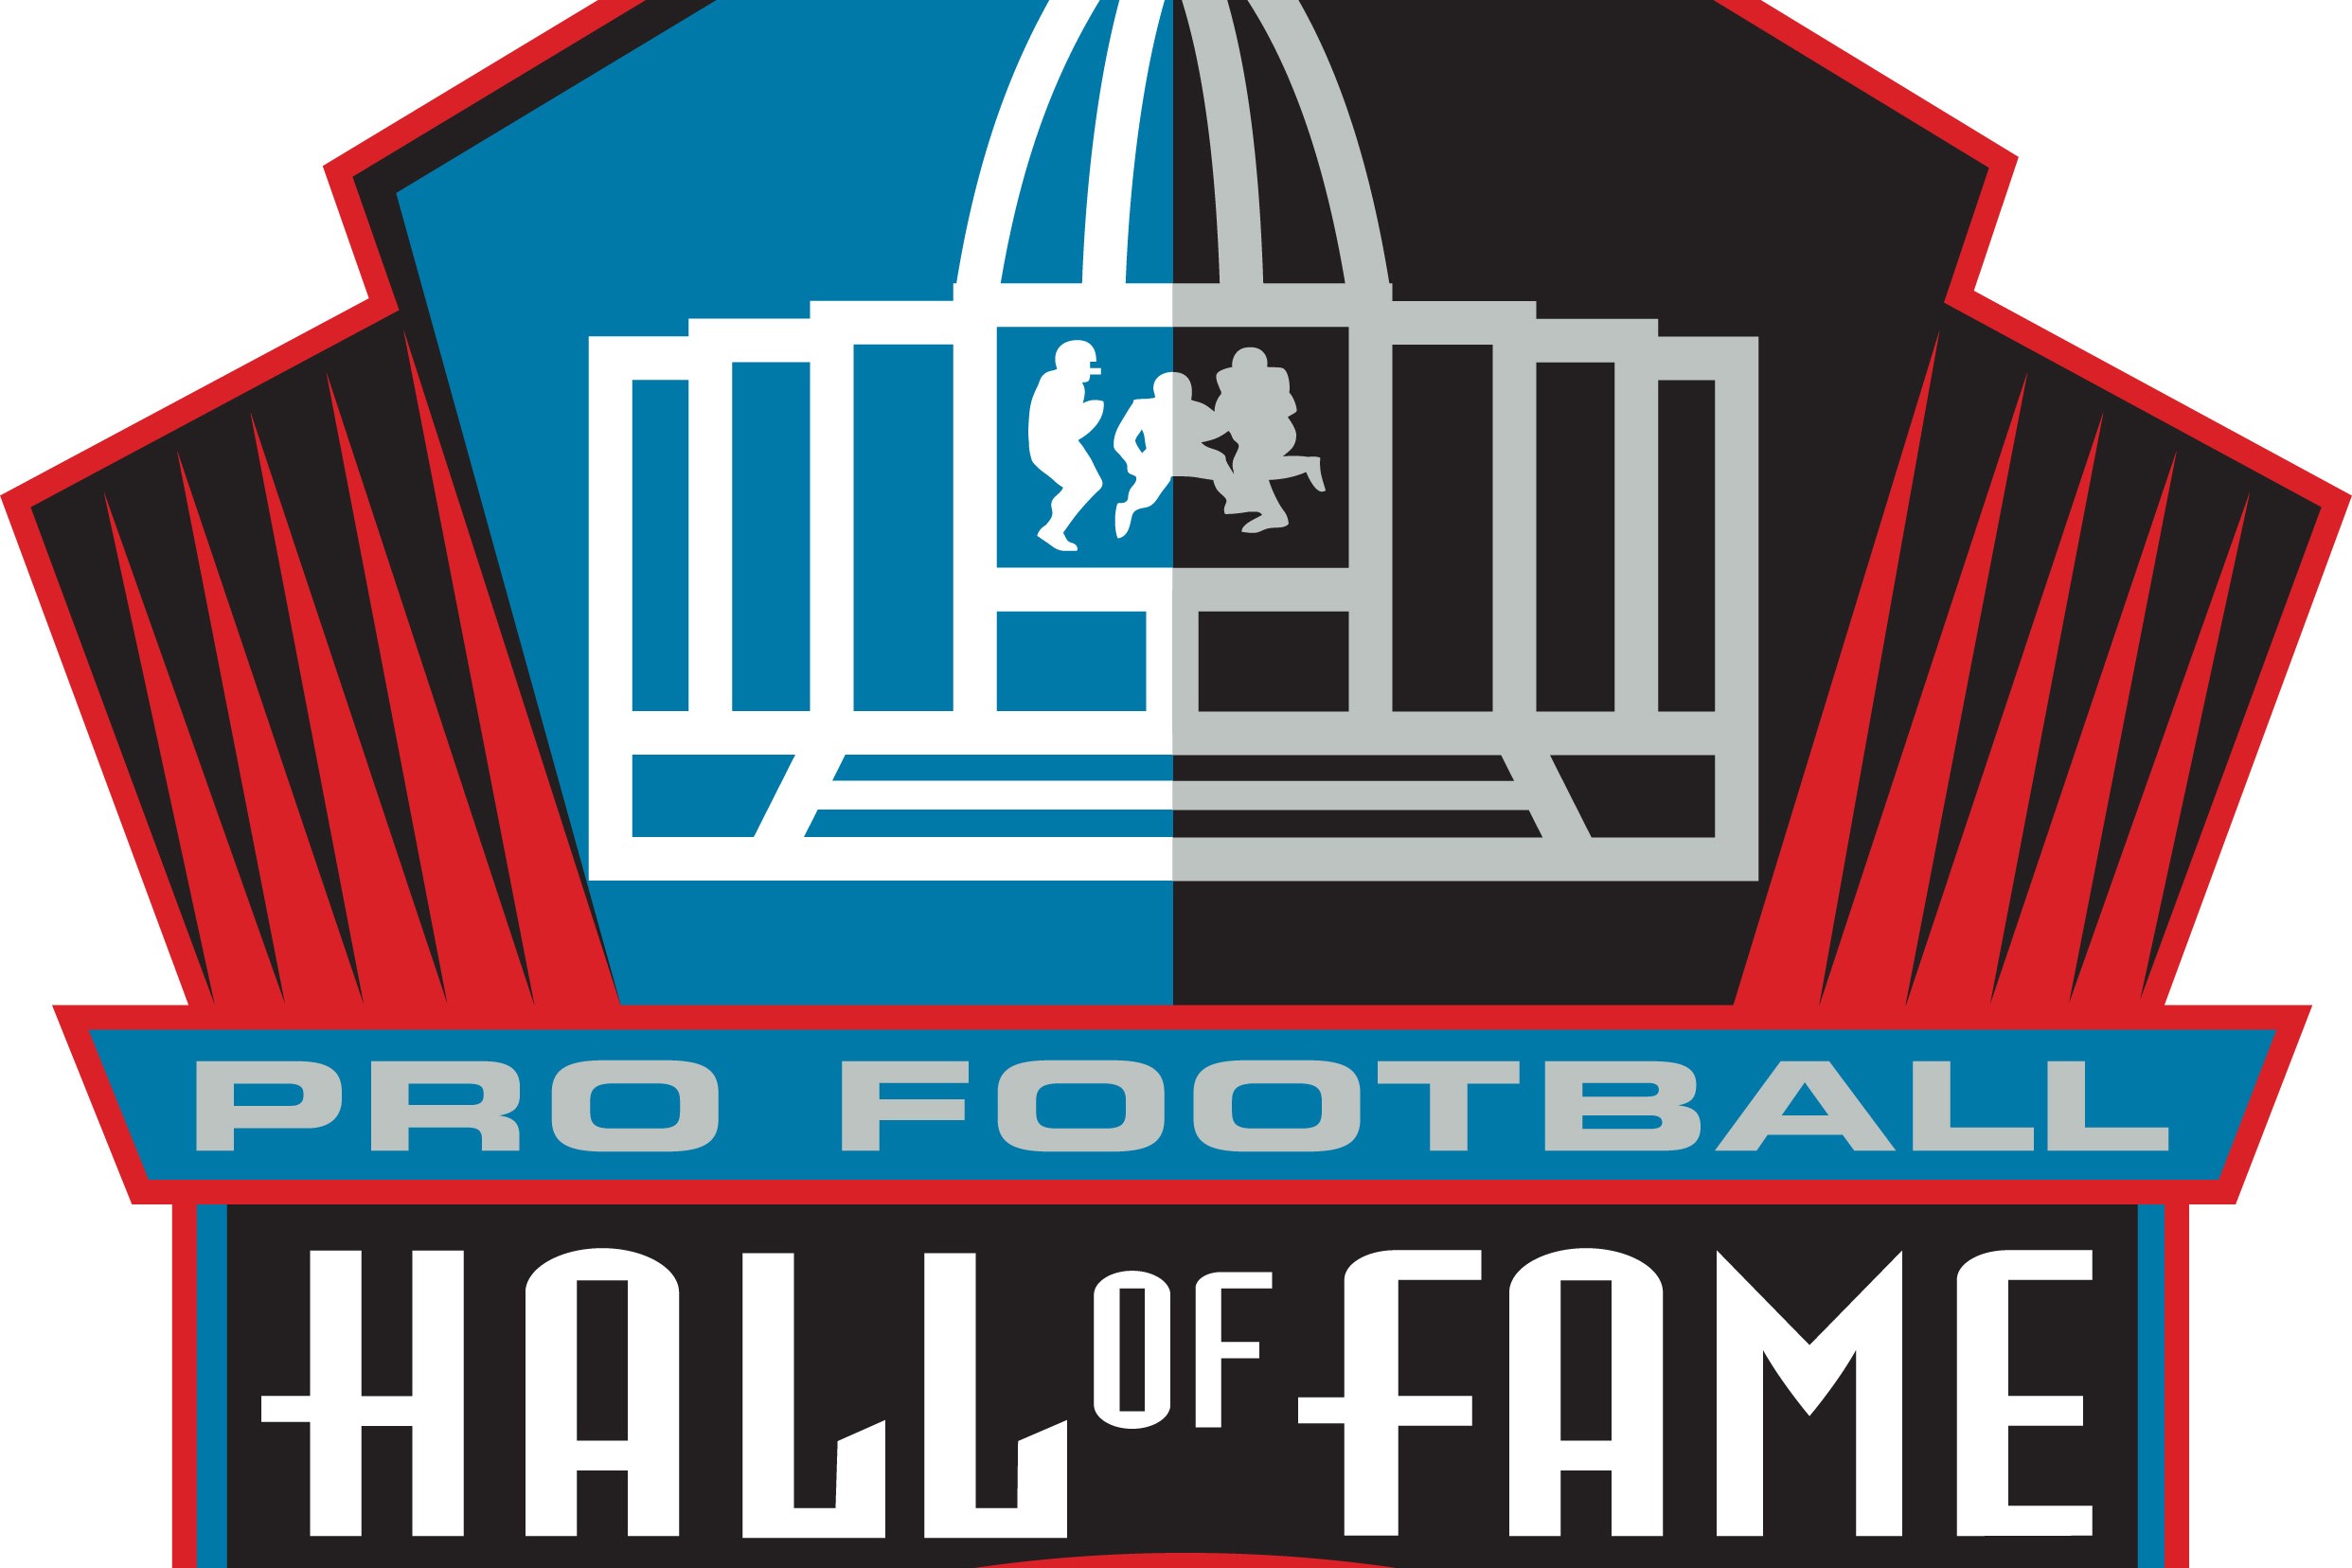 Hall of fame tiny. Hall of Fame. Hall of Fame logo. Pro Football Hall of Fame логотип. Hall of Fame Новосибирск logo Hof.